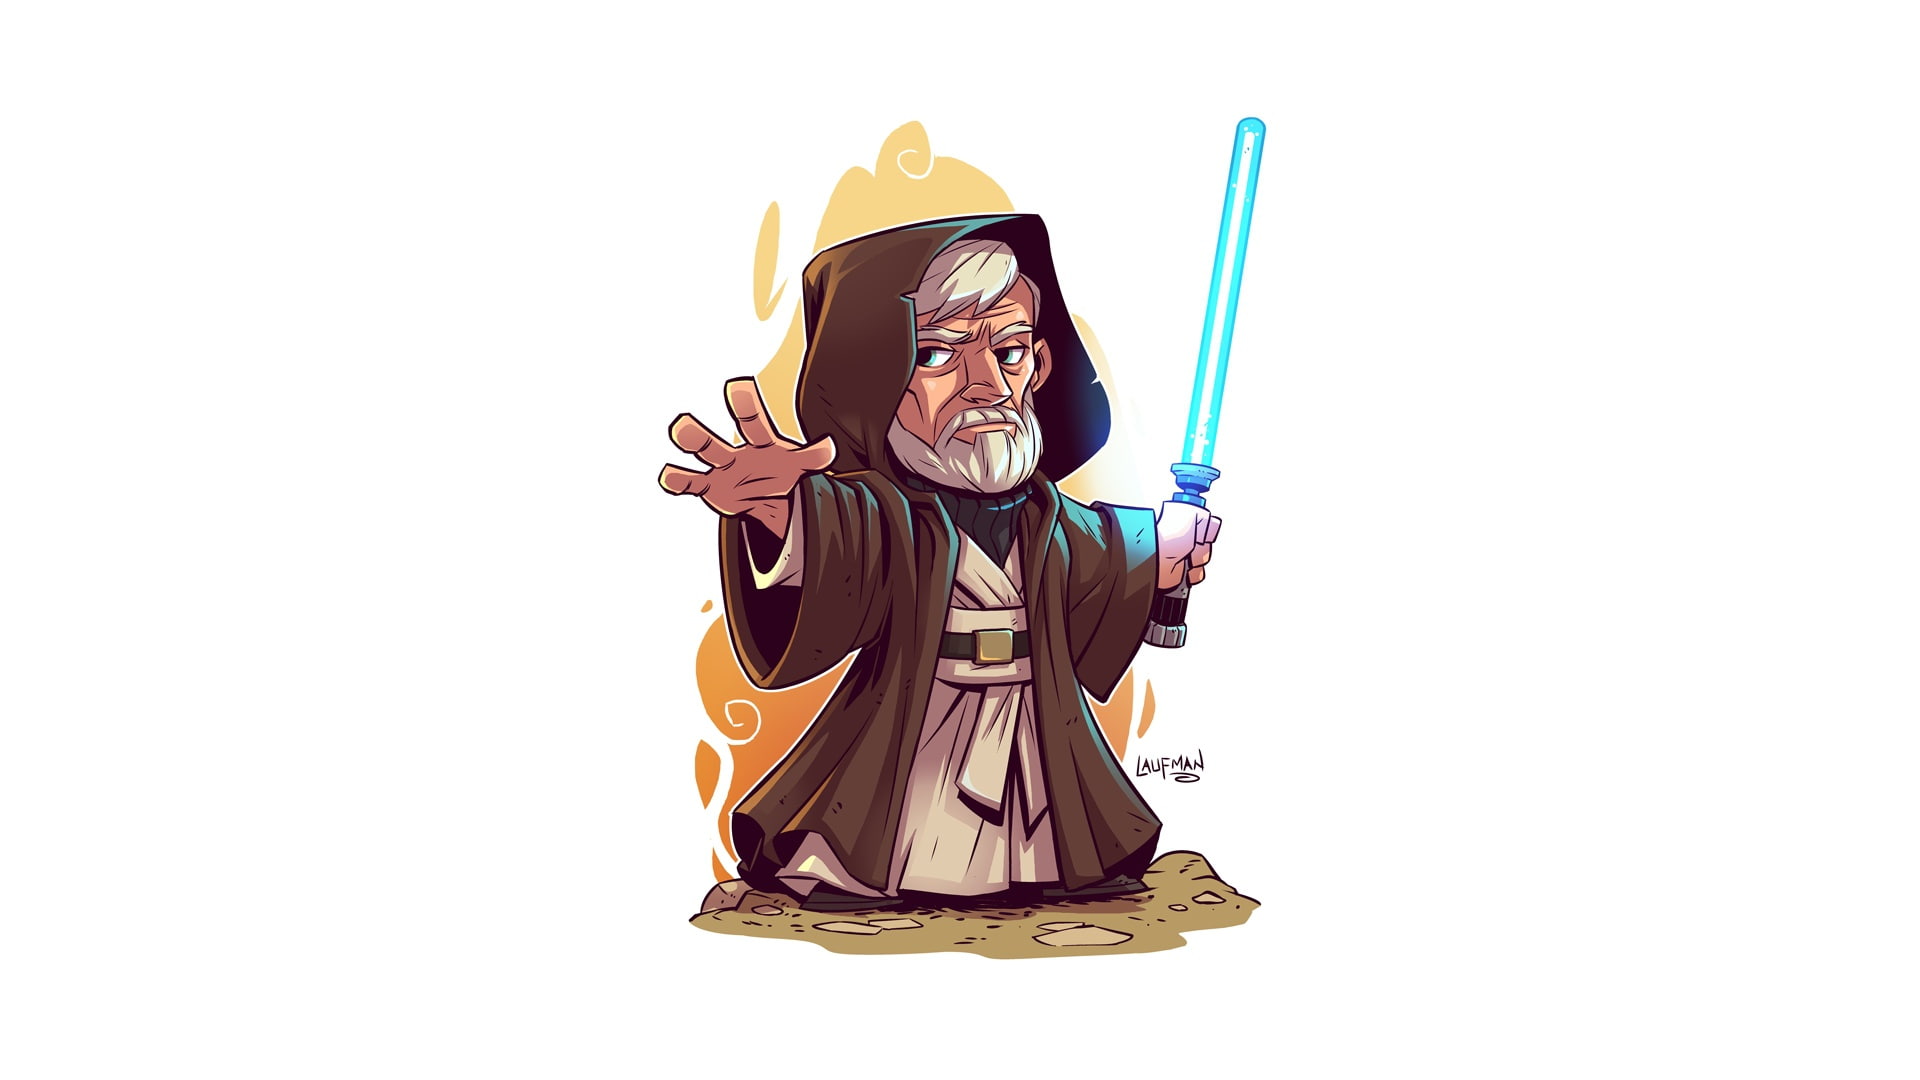 Star Wars, Obi-Wan Kenobi